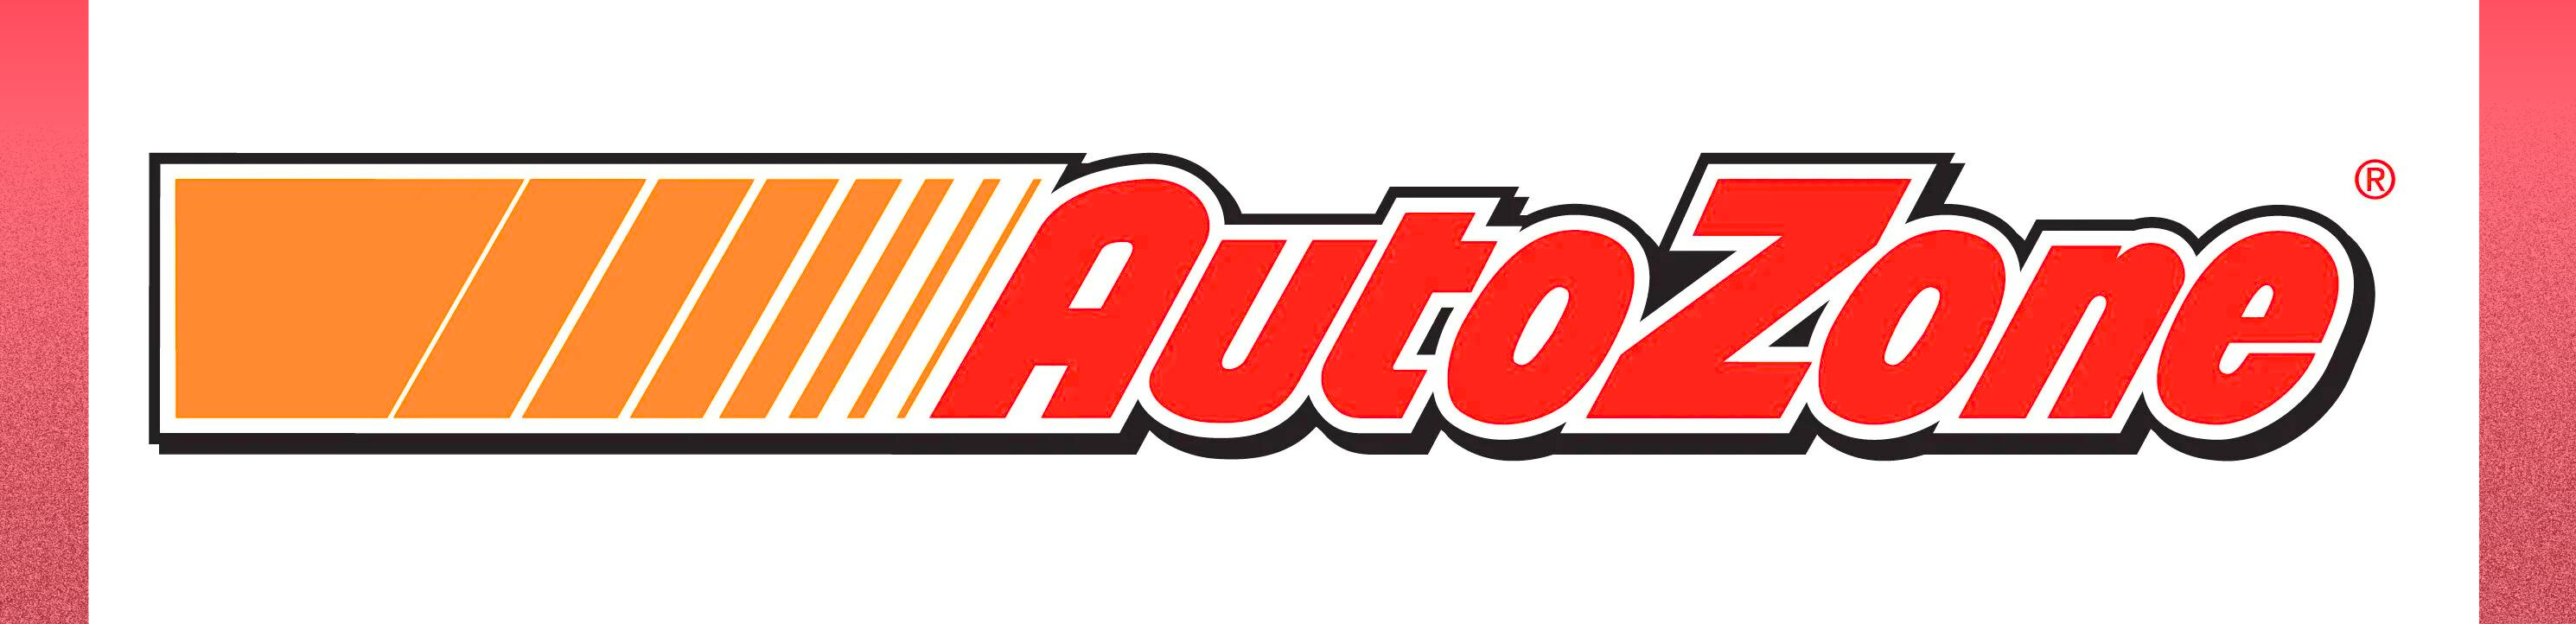 www.autozonecares.com - Win $5K - AutoZone Survey